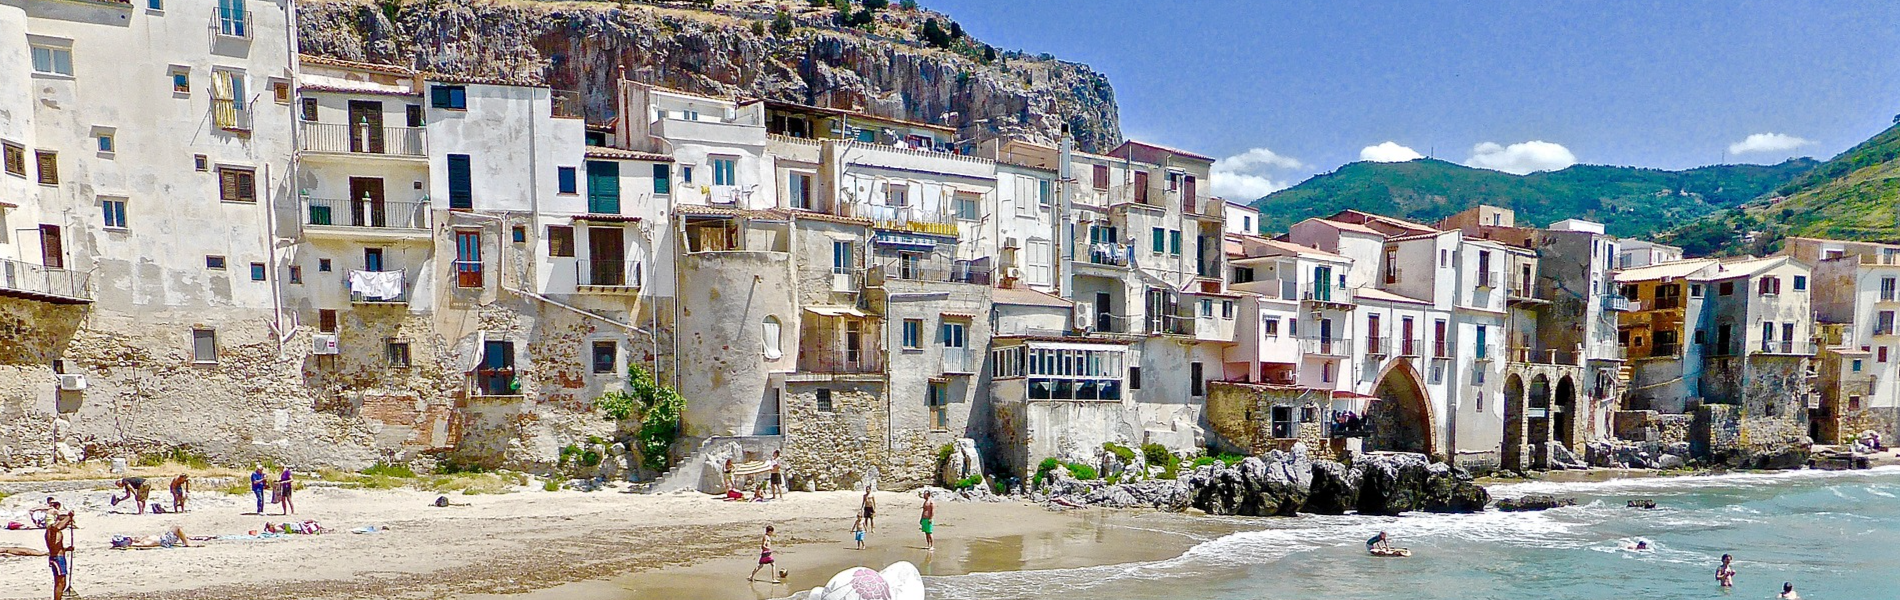 Cefalu Sicily Italy